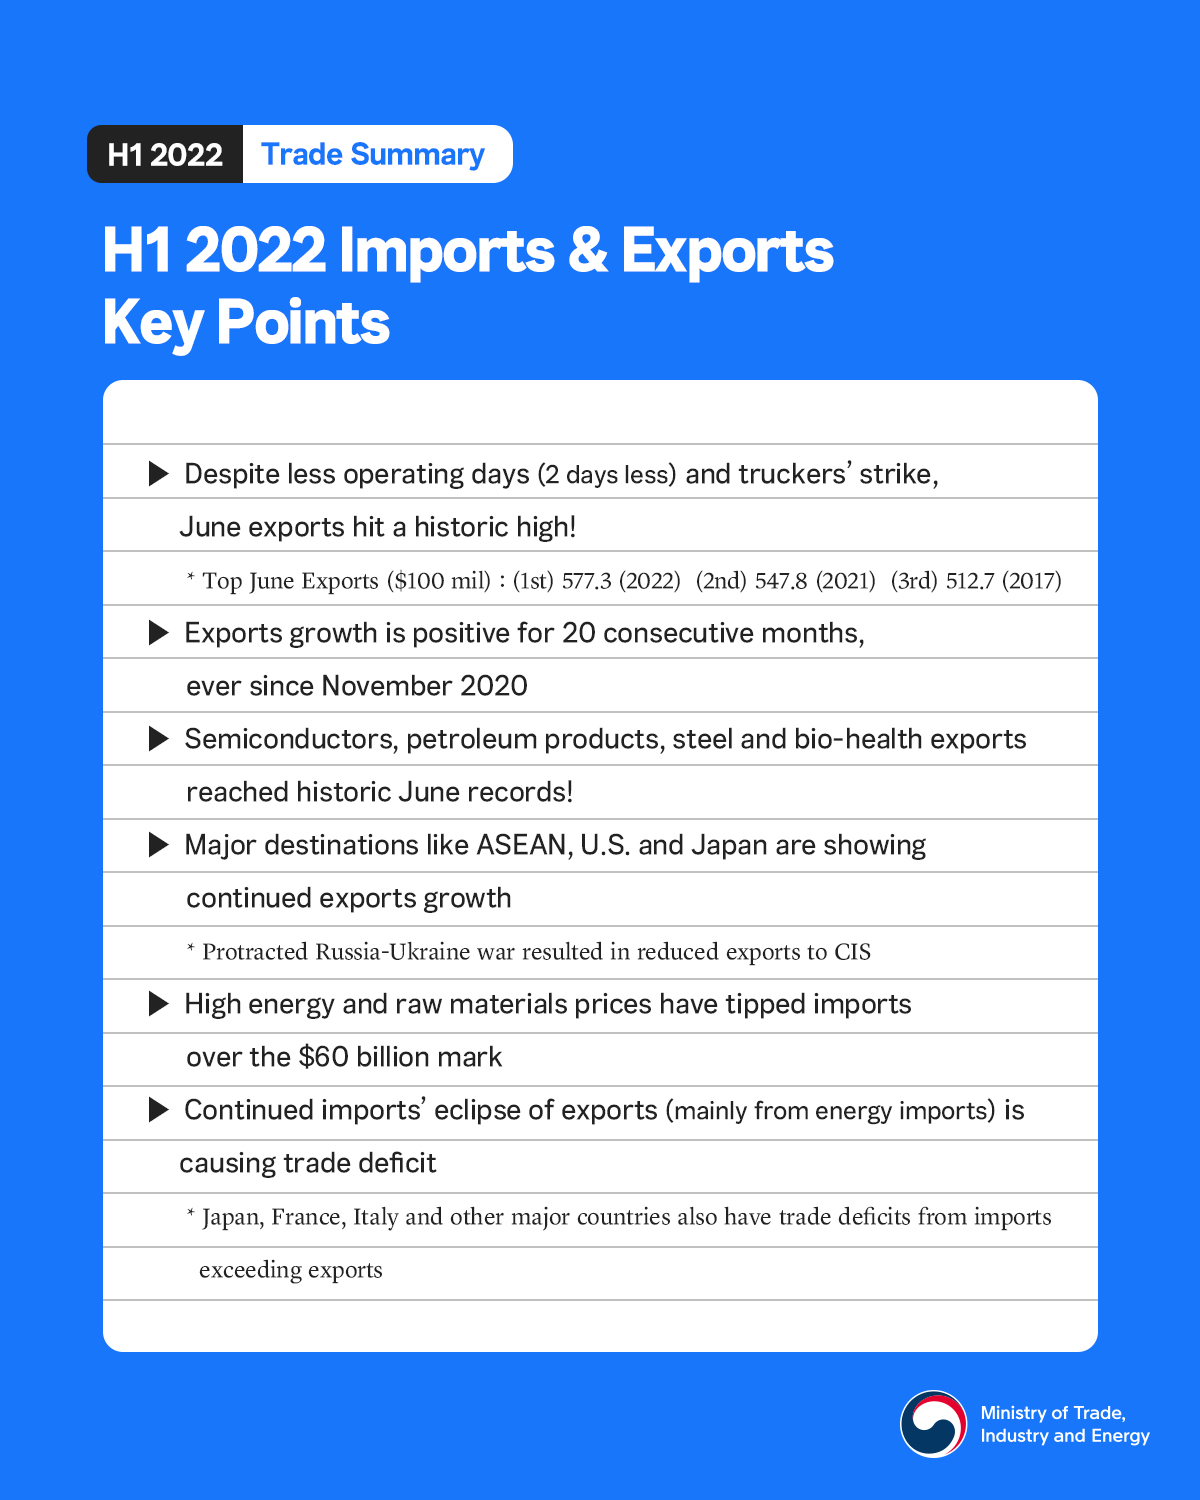 Korea's H1 2022 exports achieve historic highs! Image 2